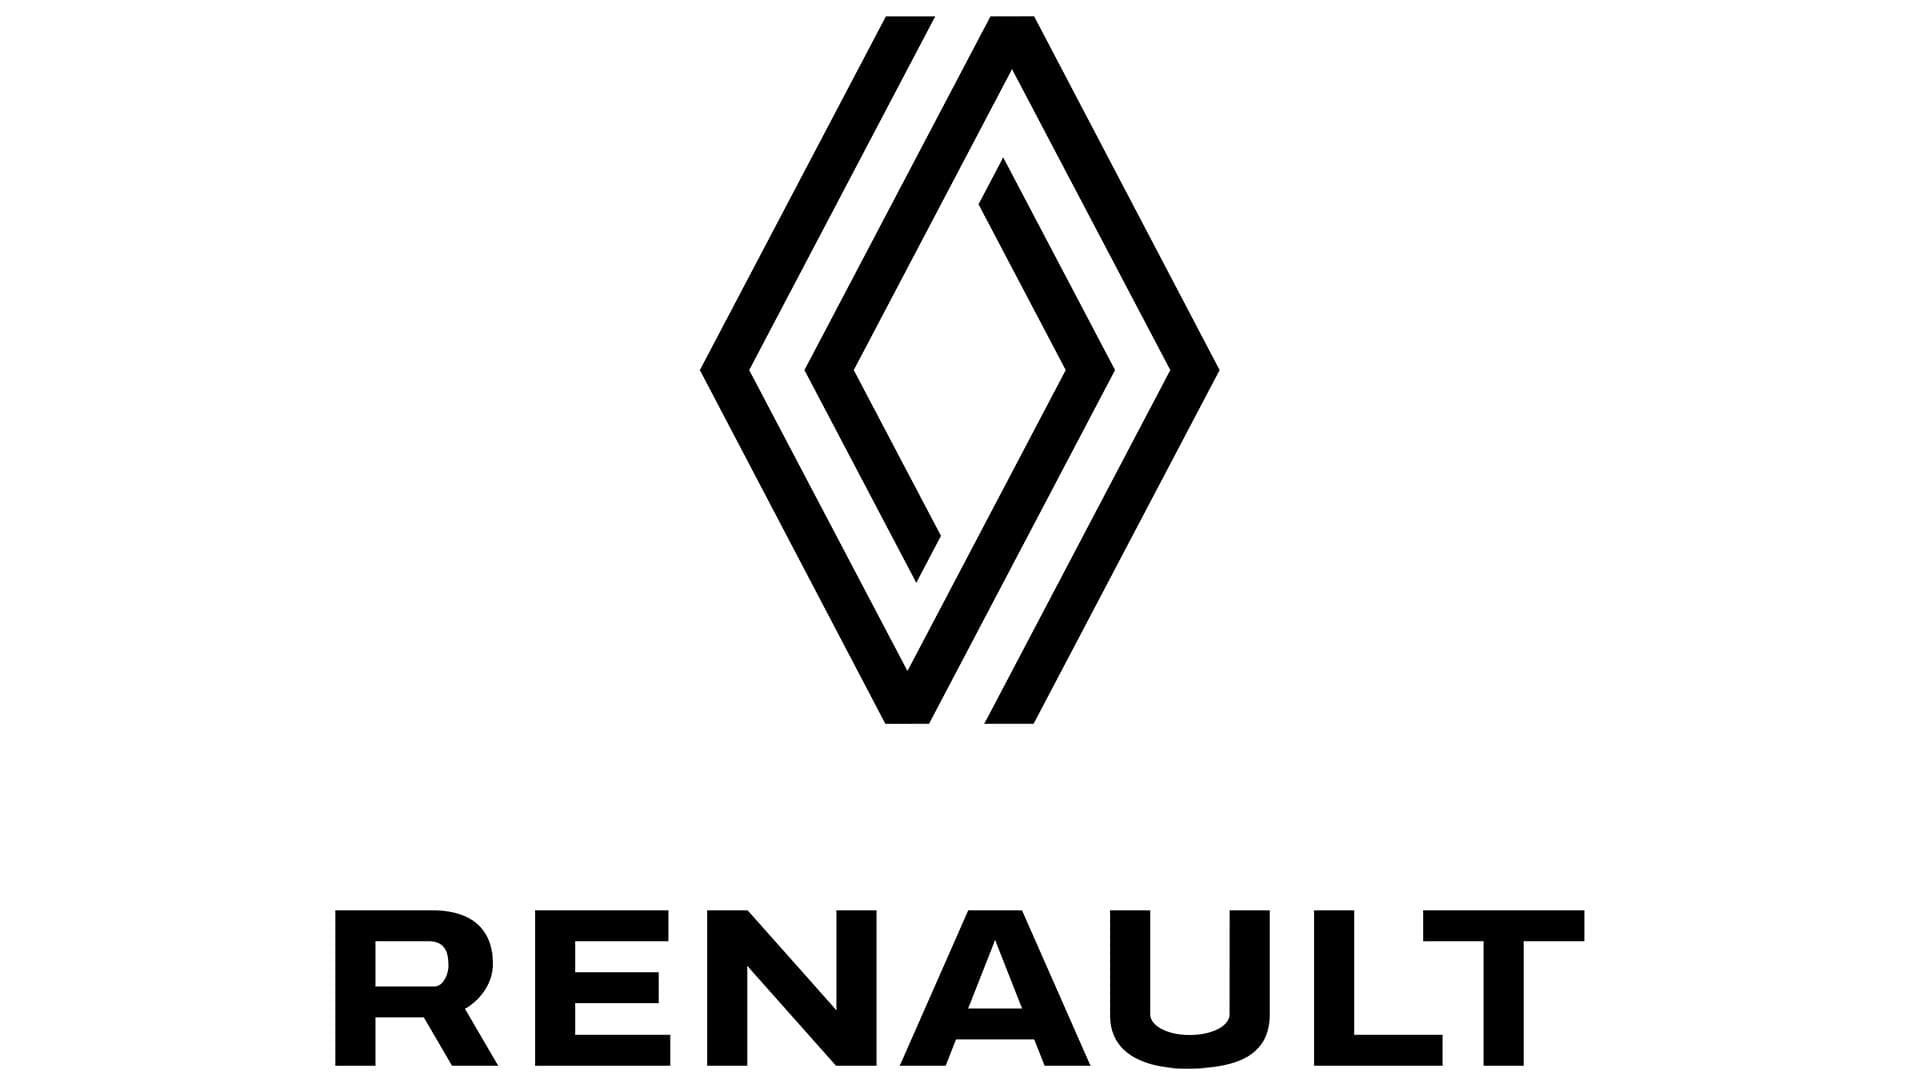 Renault logo 2021 present